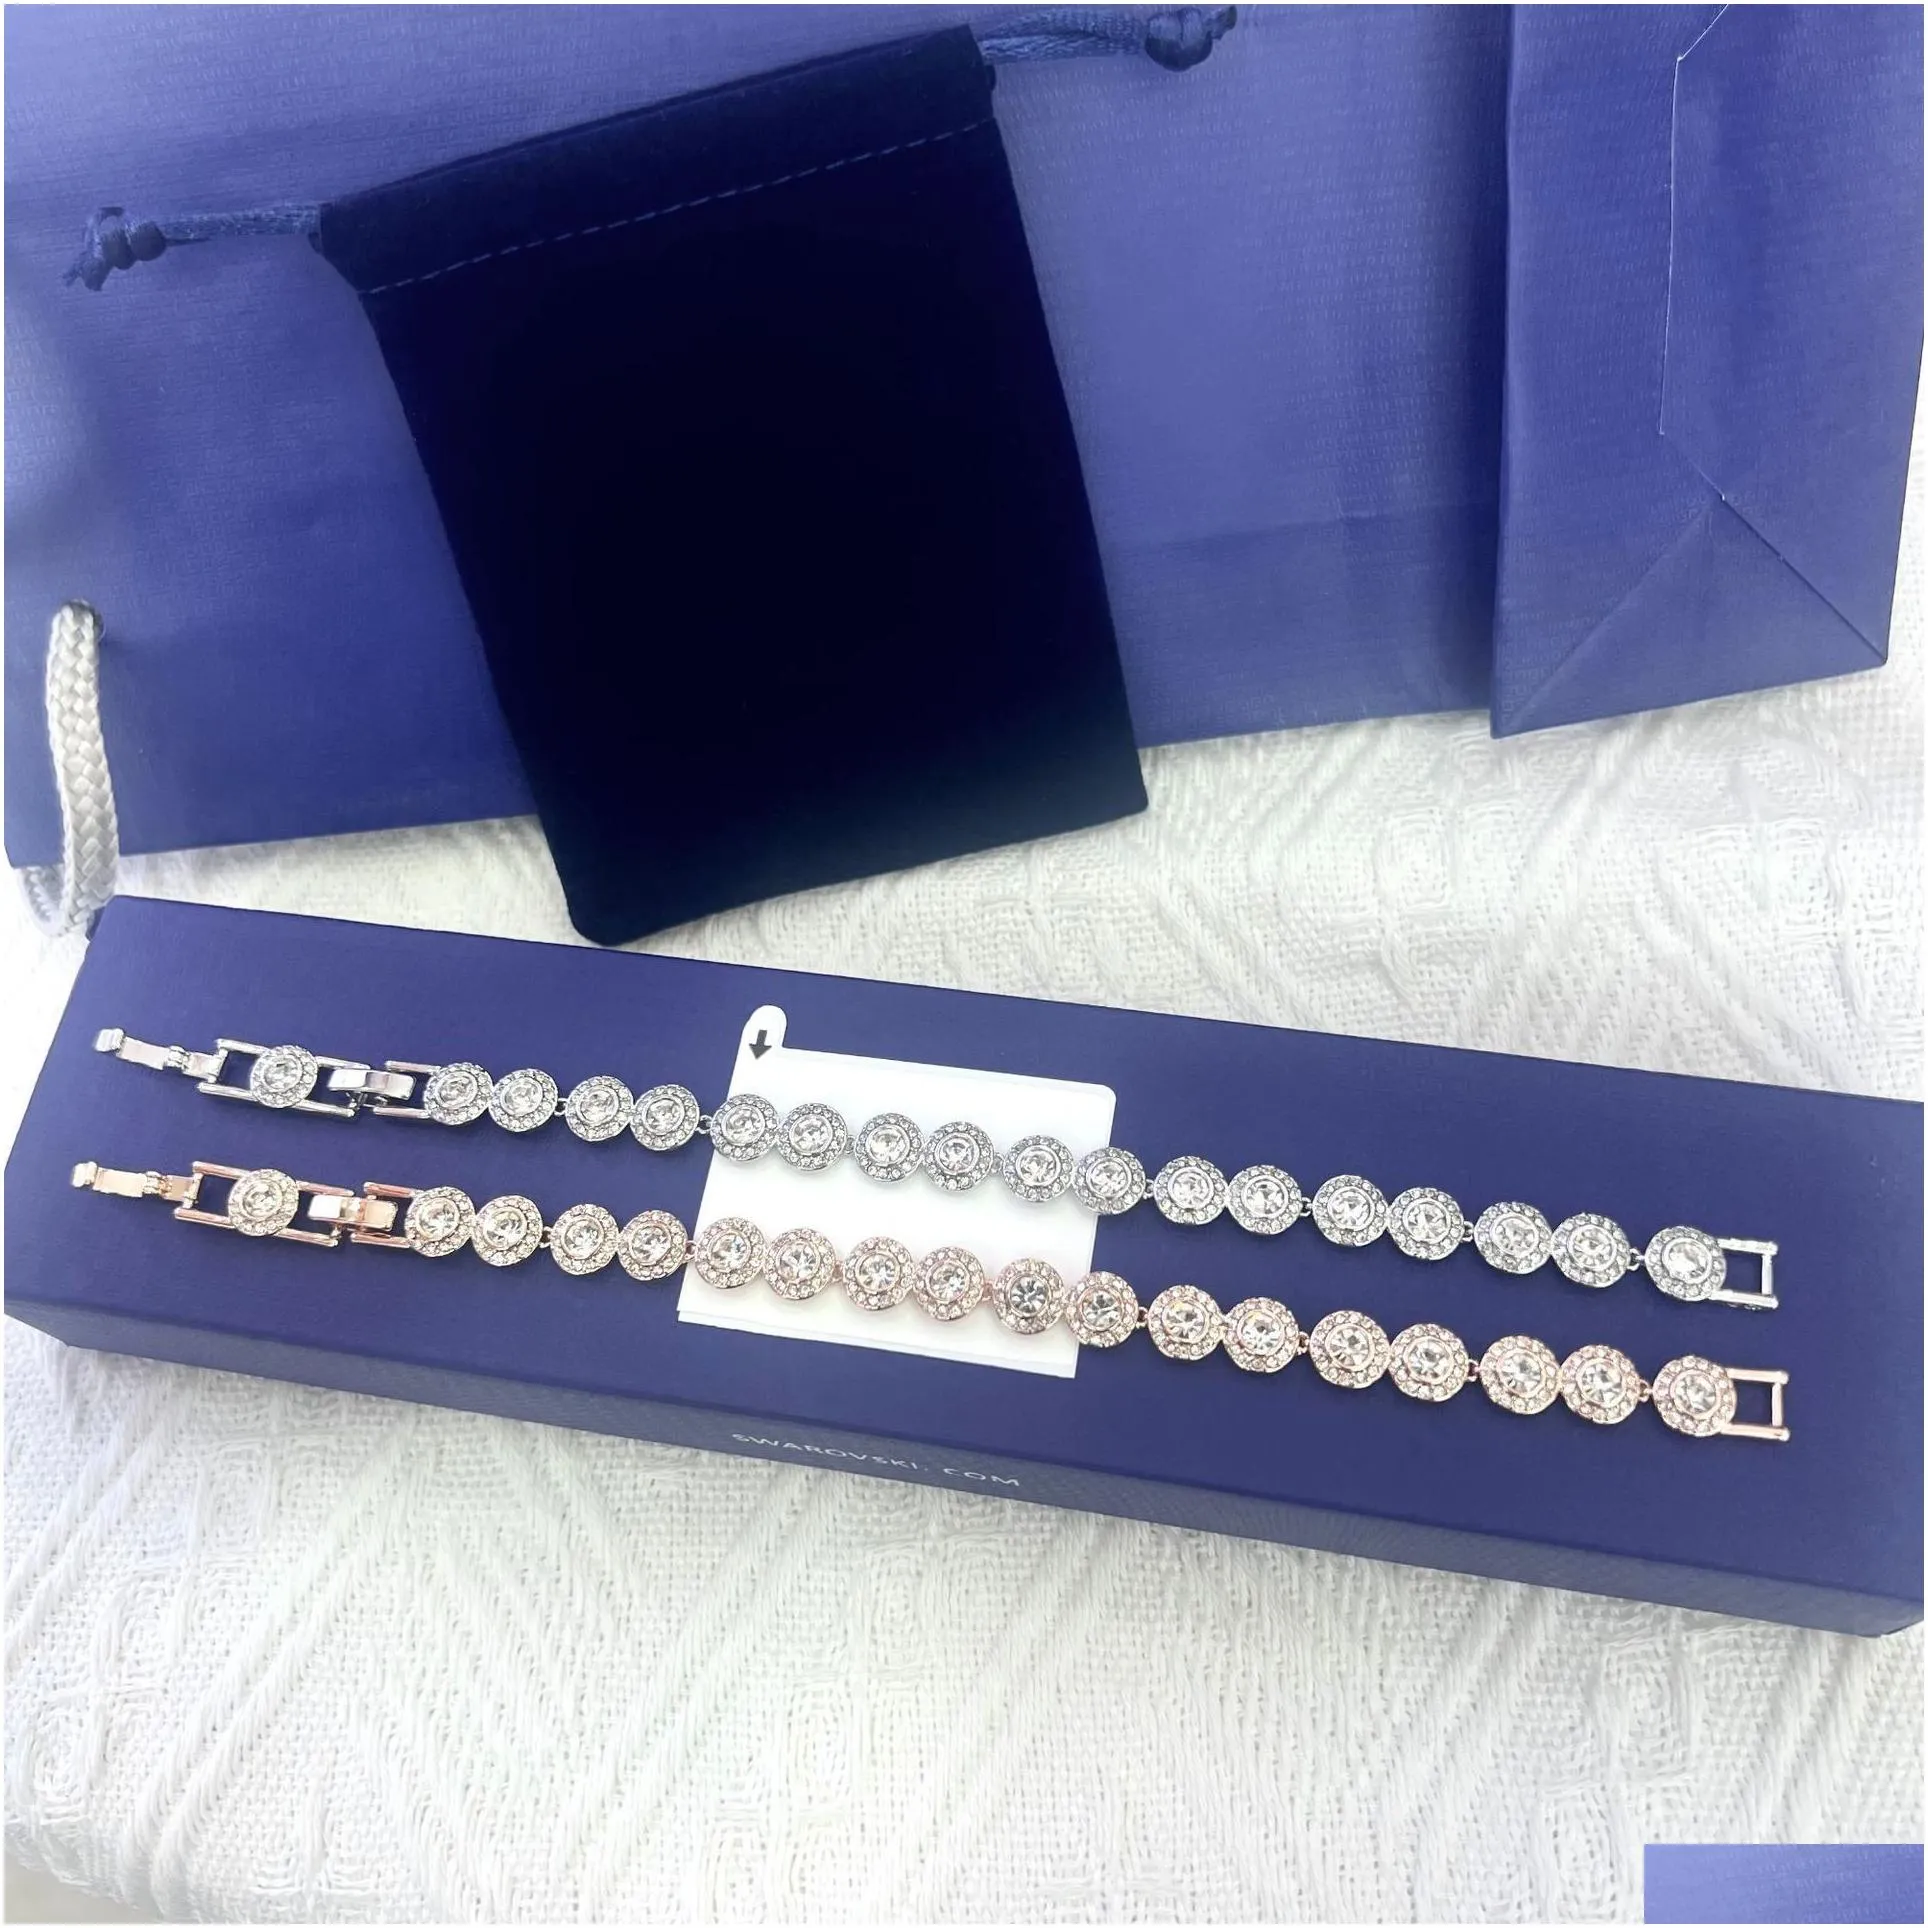 rovski bracelet crystal box jewelry collection rhodium tone finish clear crystal sent to the original box